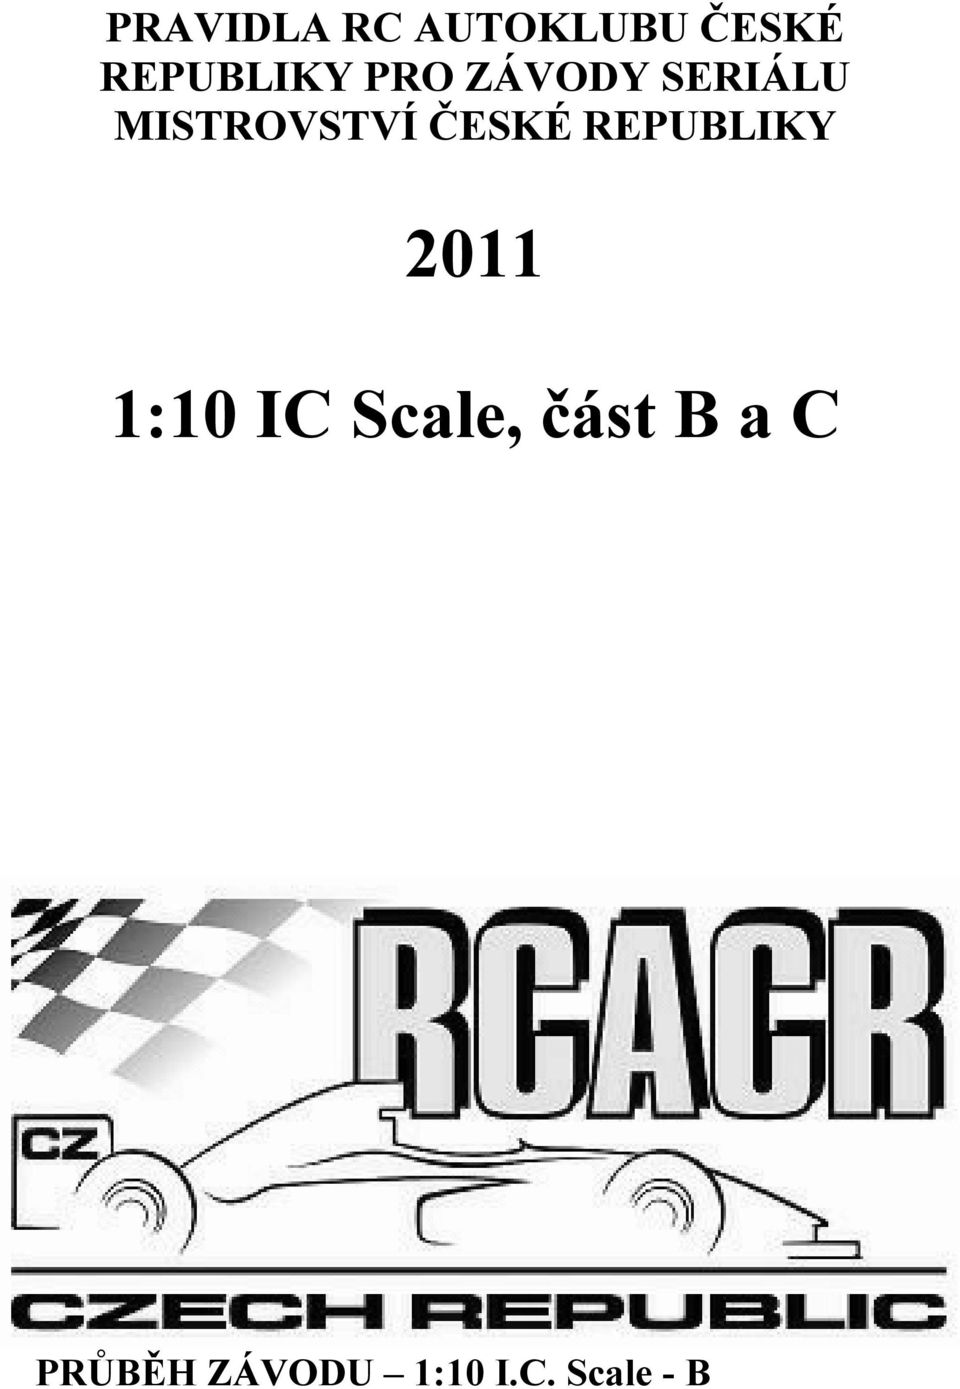 REPUBLIKY 2011 1:10 IC Scale, část B